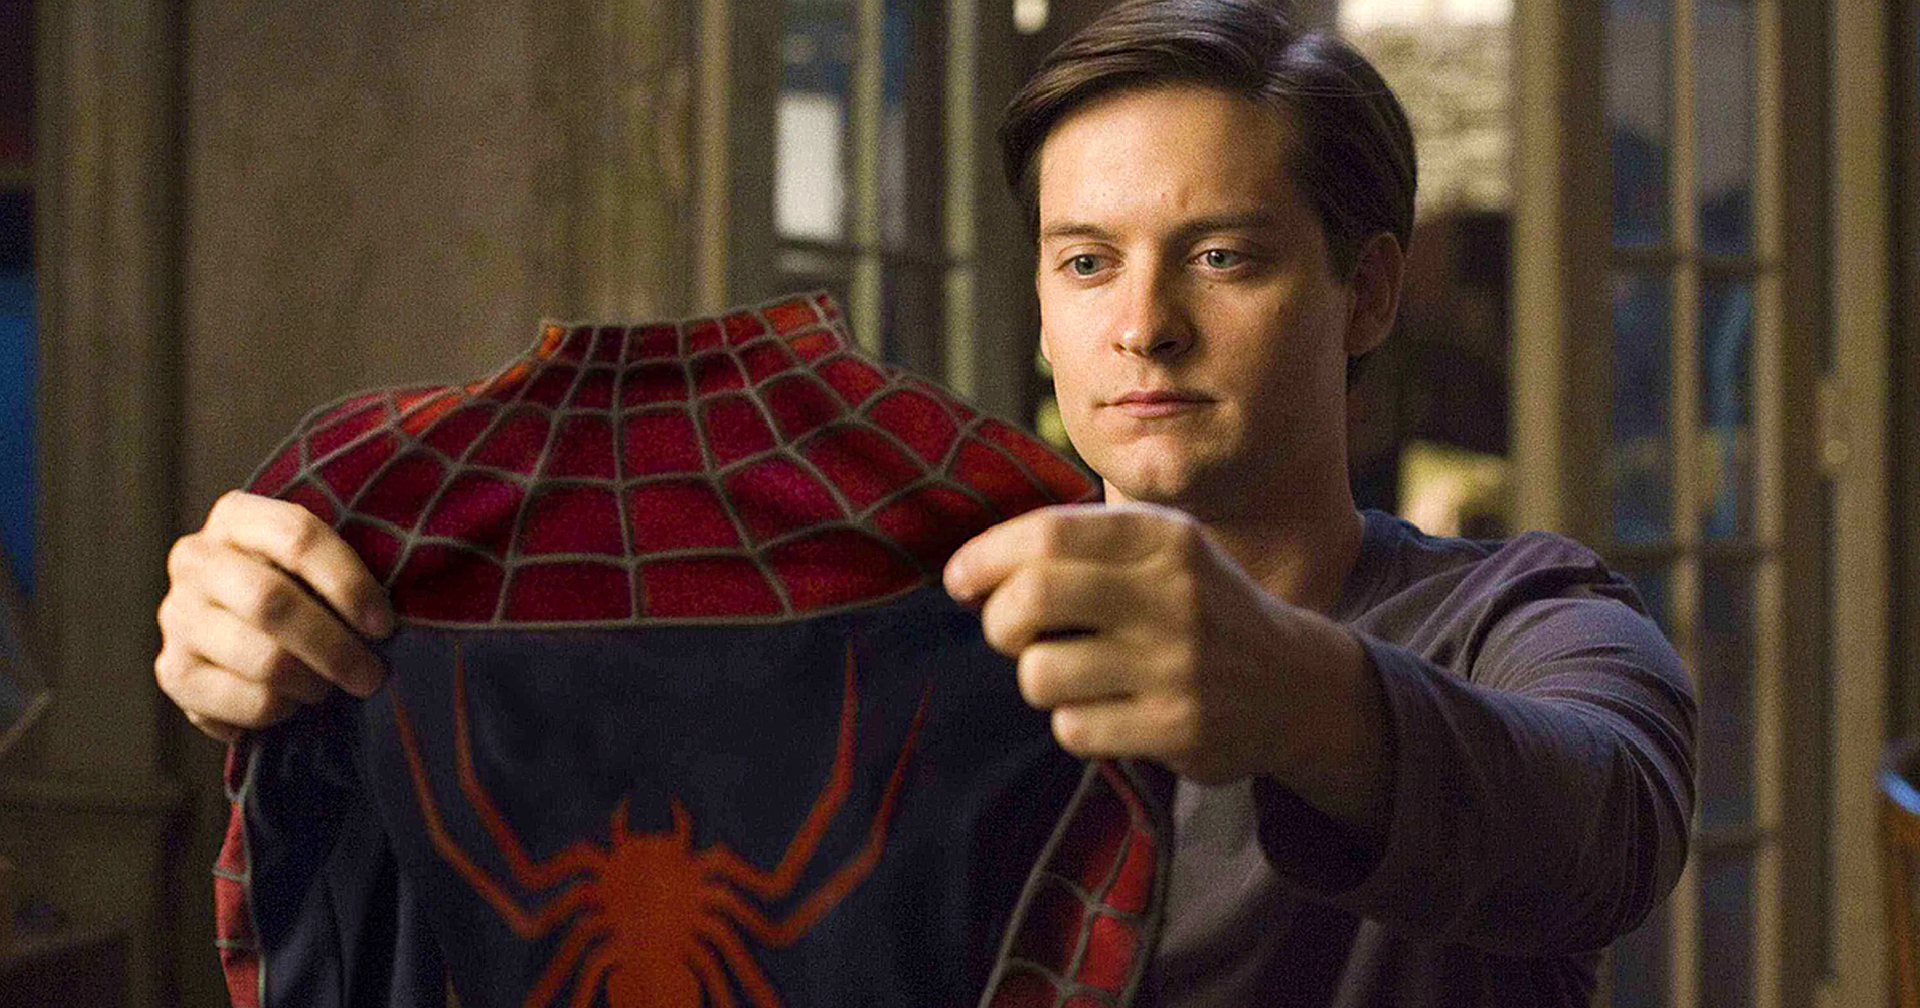 Sam Raimi โต้ข่าวลือการสร้าง ‘Spider-Man 4’ ของ Tobey Maguire, แต่อาจได้กลับมาในหนัง MCU เรื่องอื่น